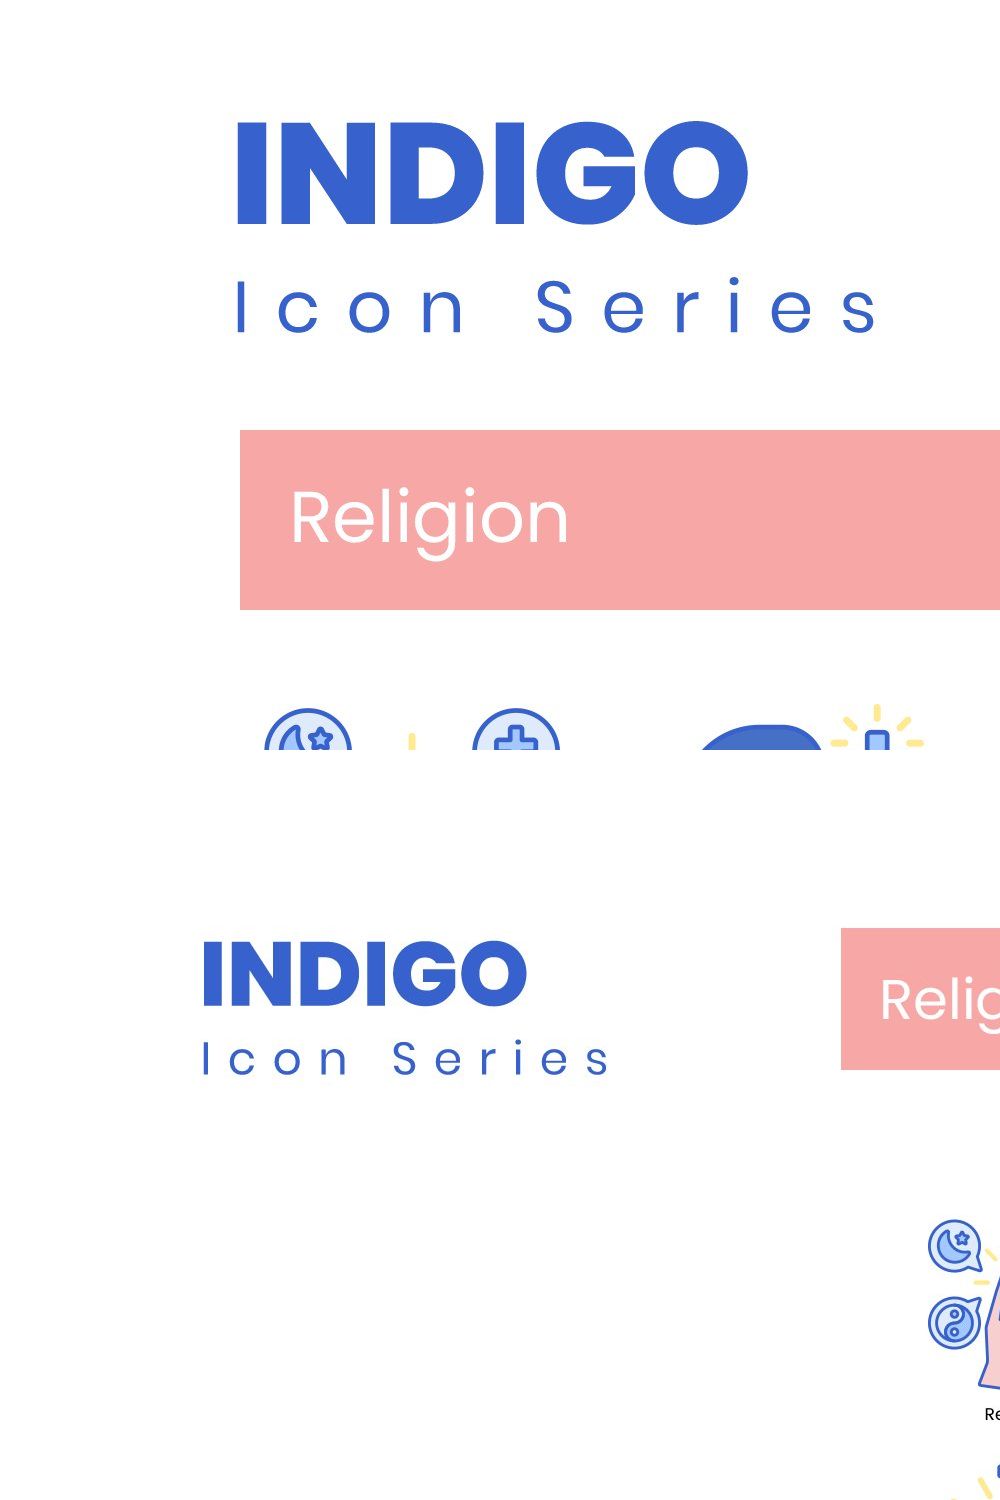 90 Religion Icons | Indigo pinterest preview image.